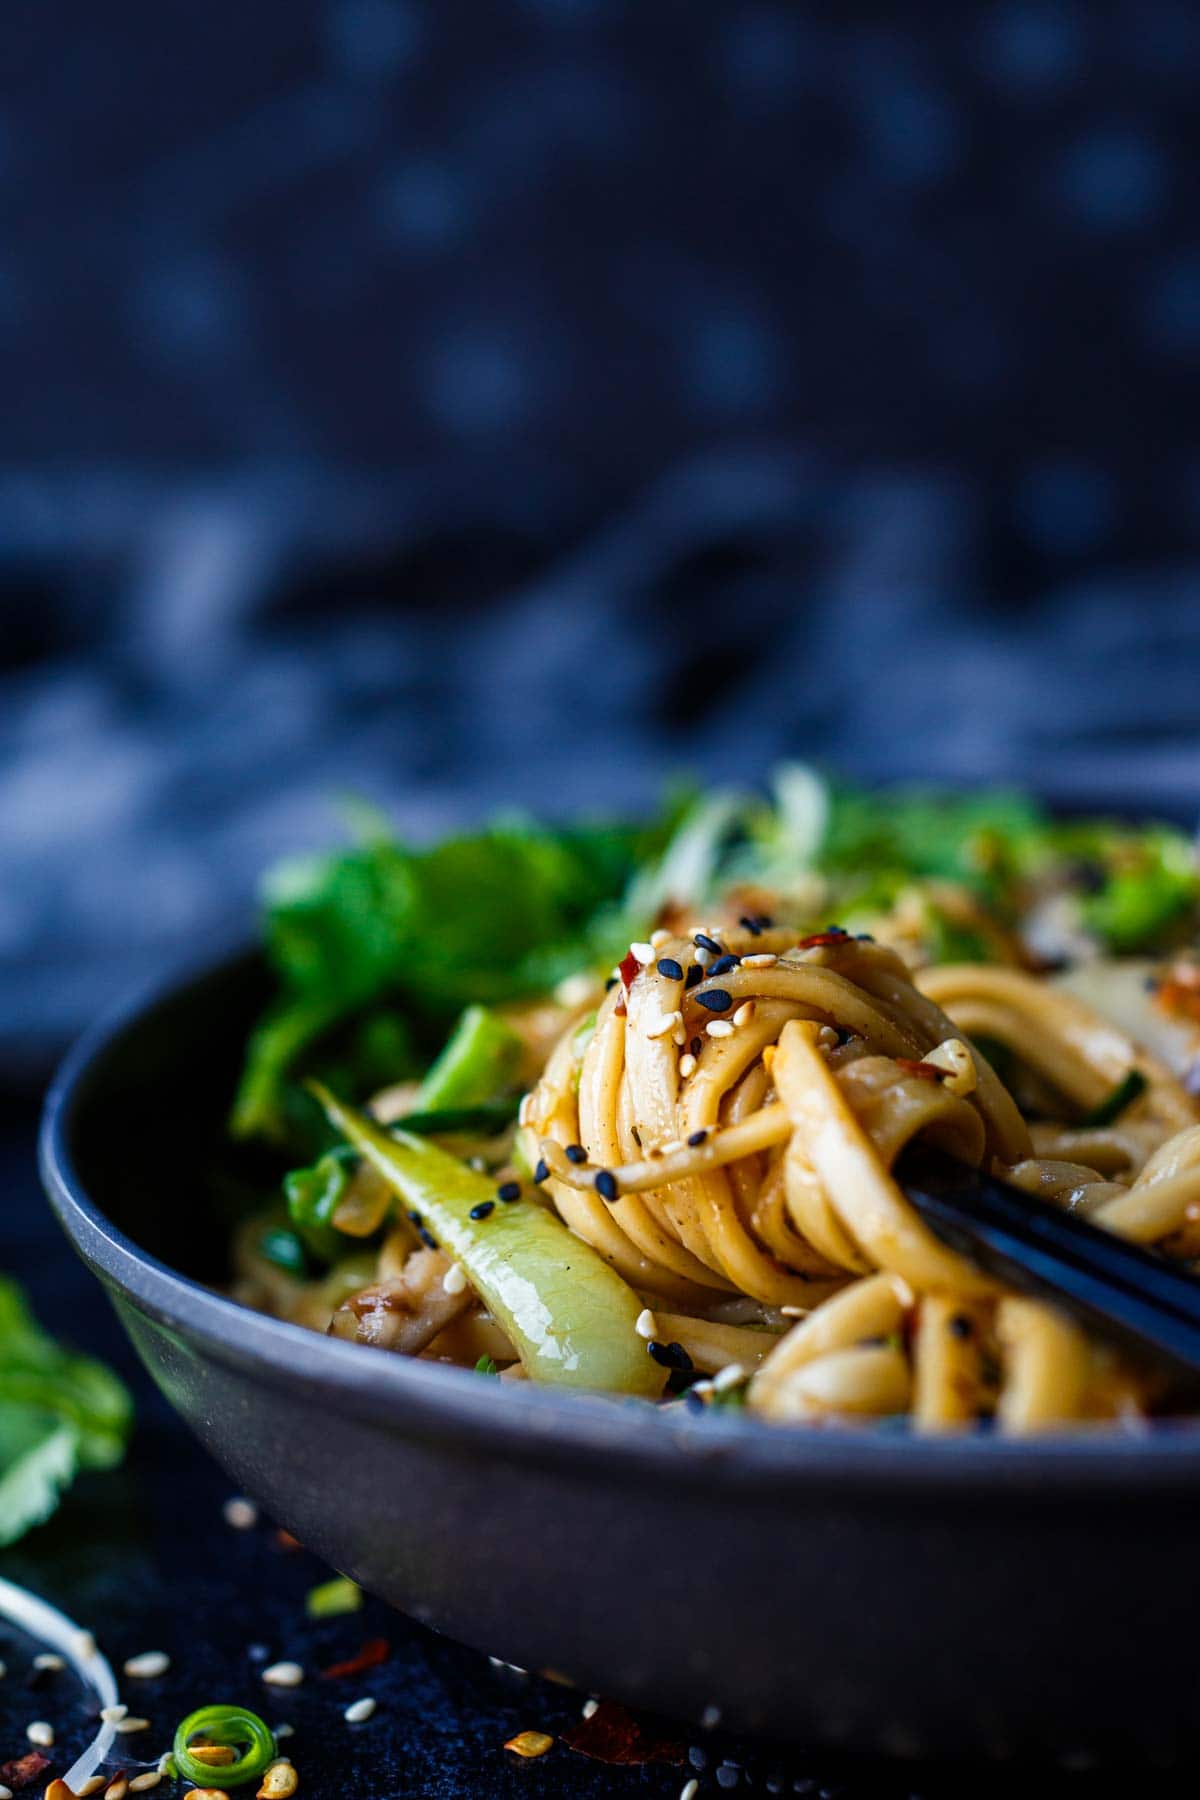 chopsticks holding twirl of longevity noodles over bowl, garnished with sesame seeds.